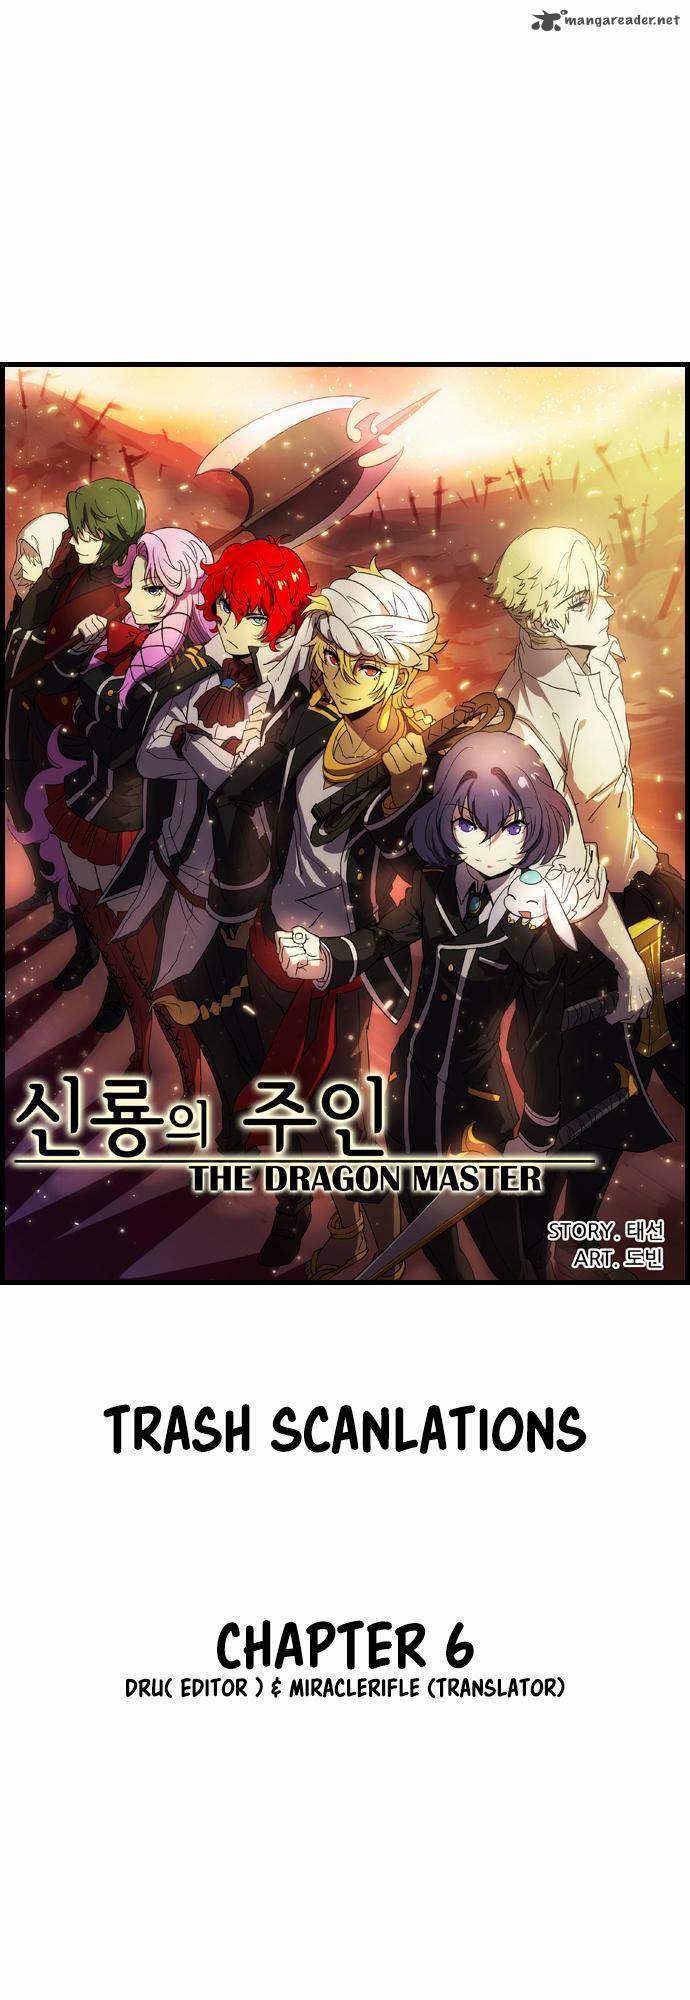 The Dragon Master 6 1